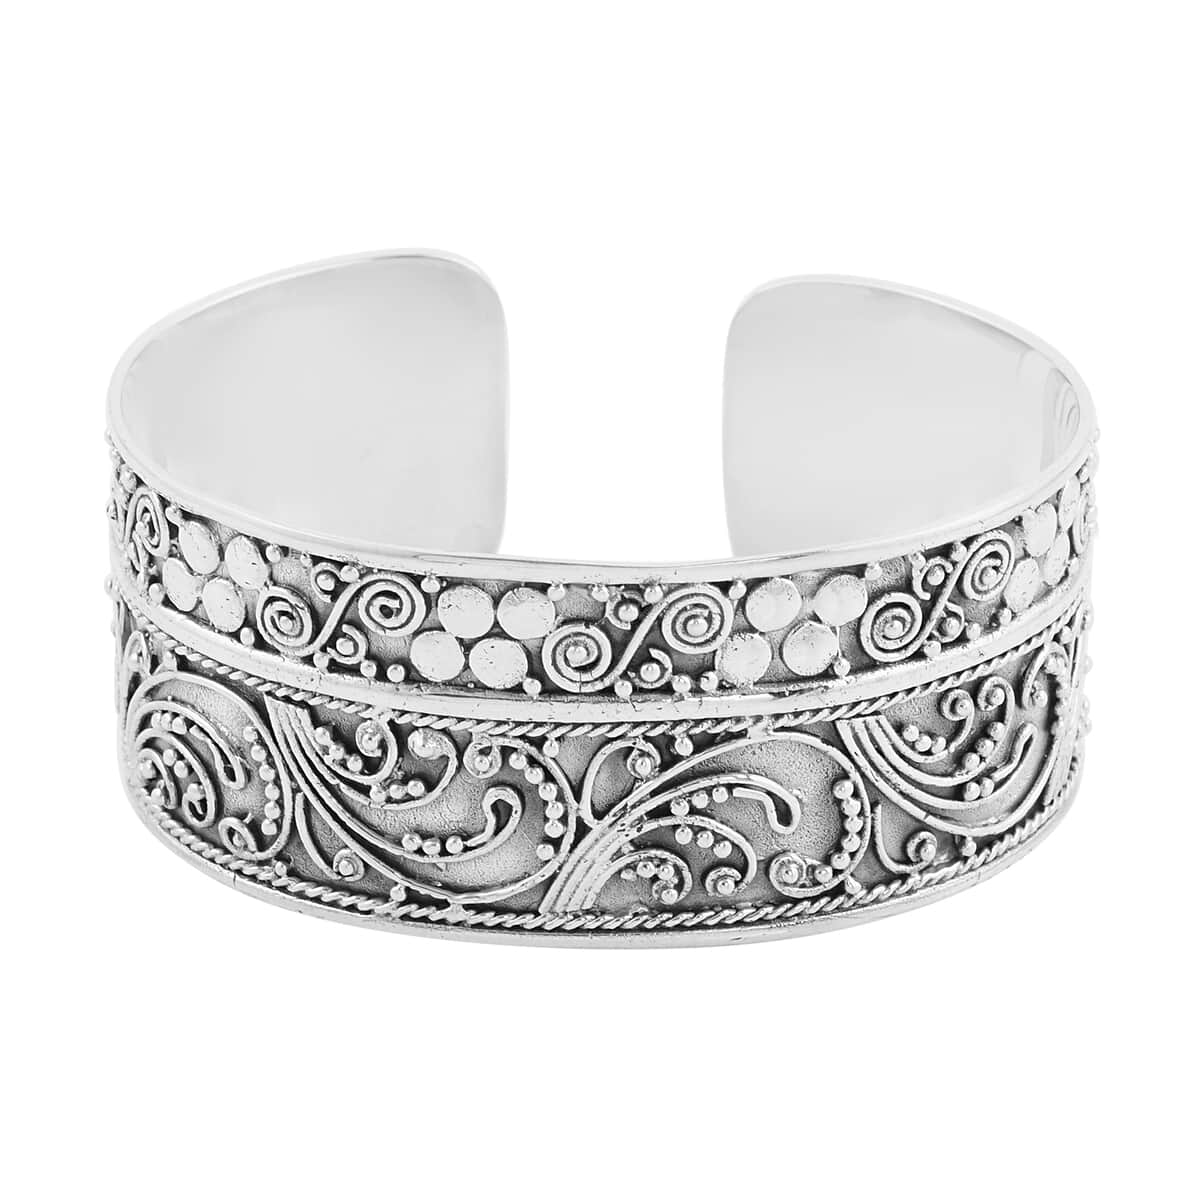 Bali Legacy Sterling Silver Cuff Bracelet (7.25 in) 54.50 Grams image number 0